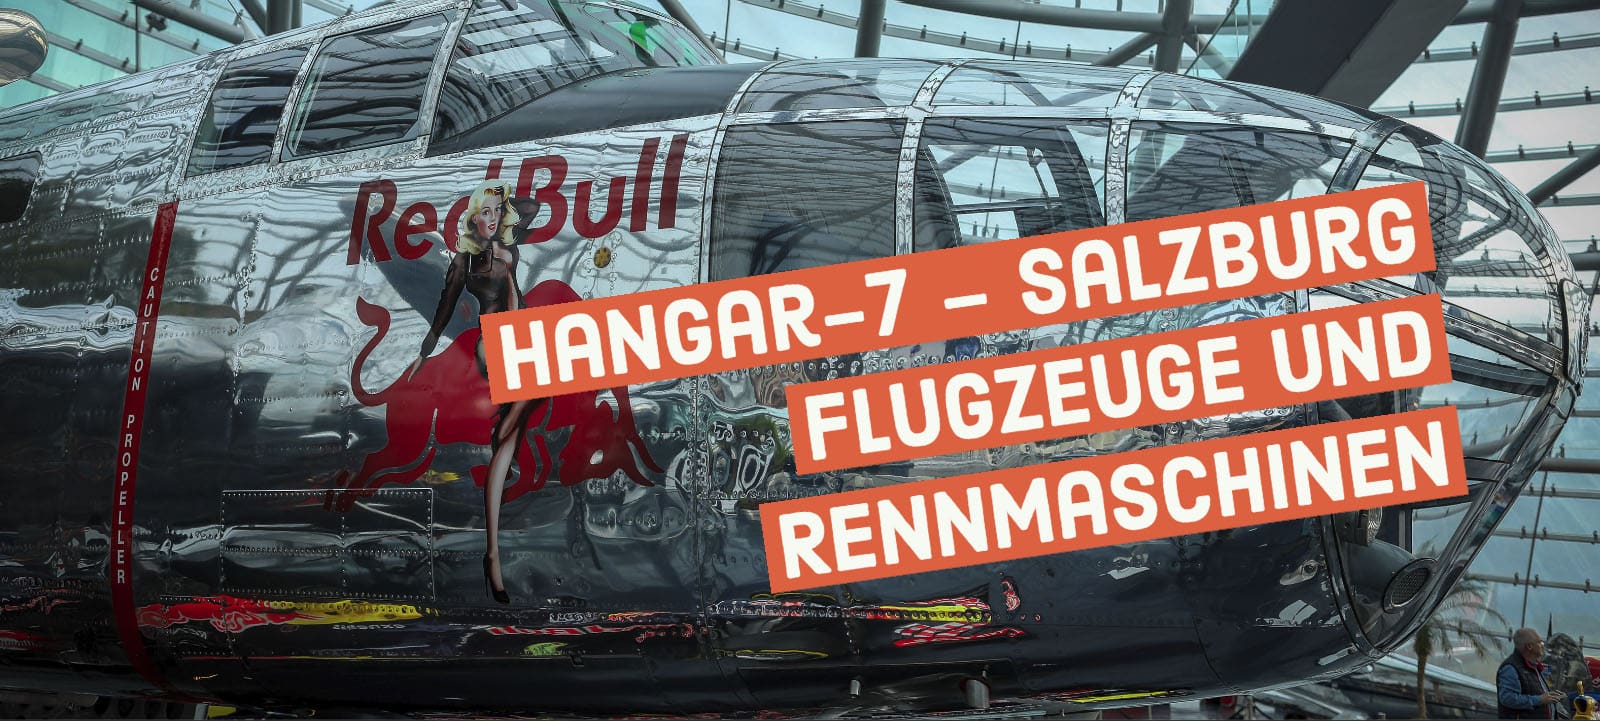 Hangar 7 - Red Bull Salzburg